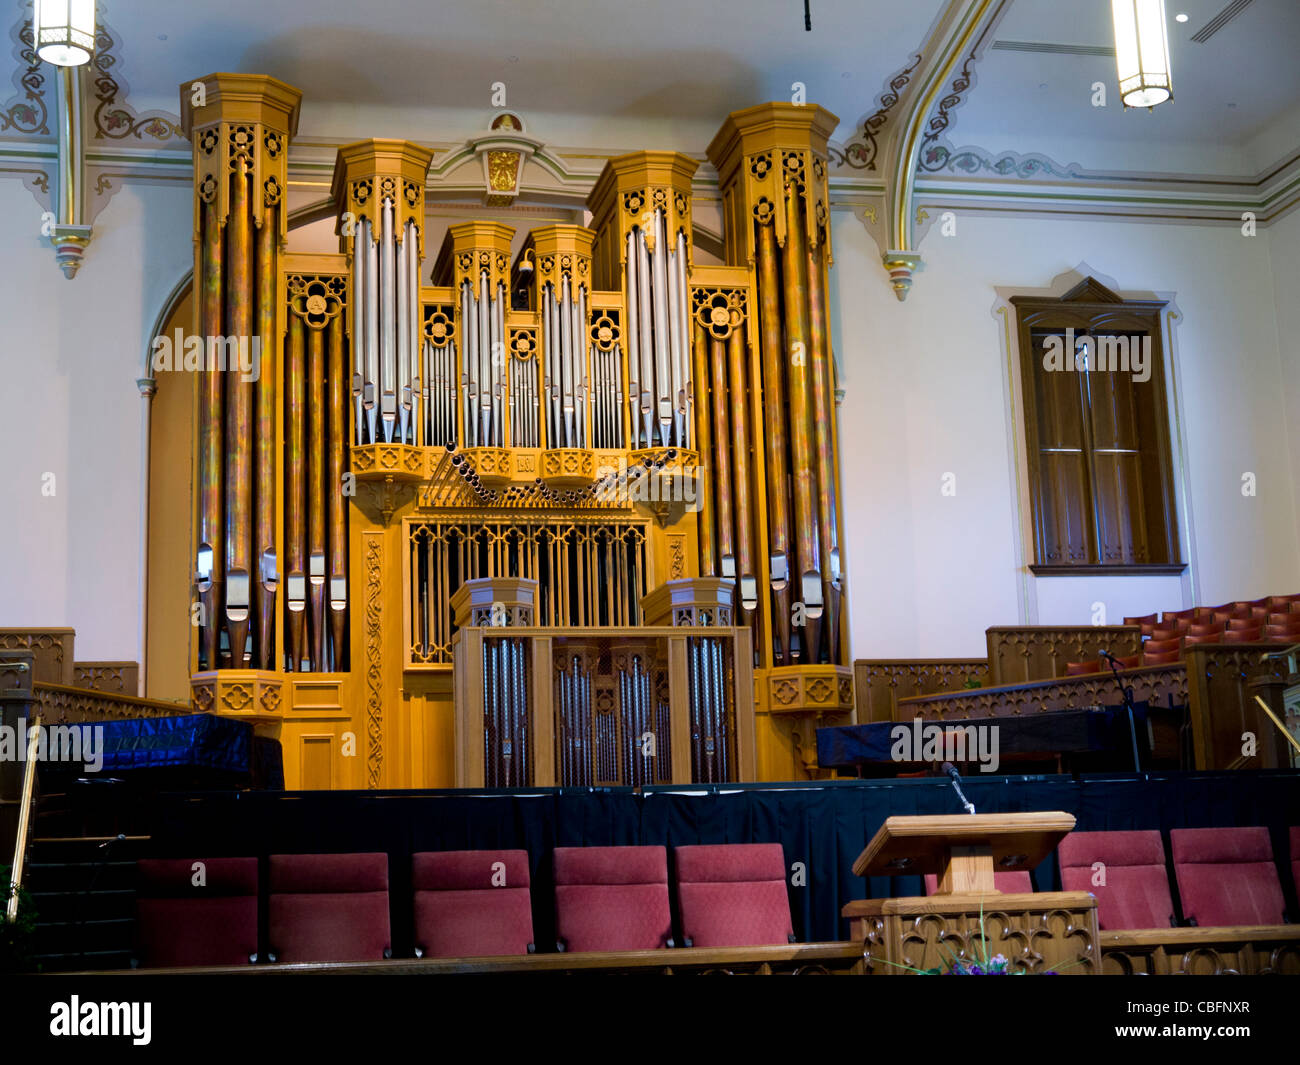 Organ In Mormon Tabernacle Temple Square Salt Lake City